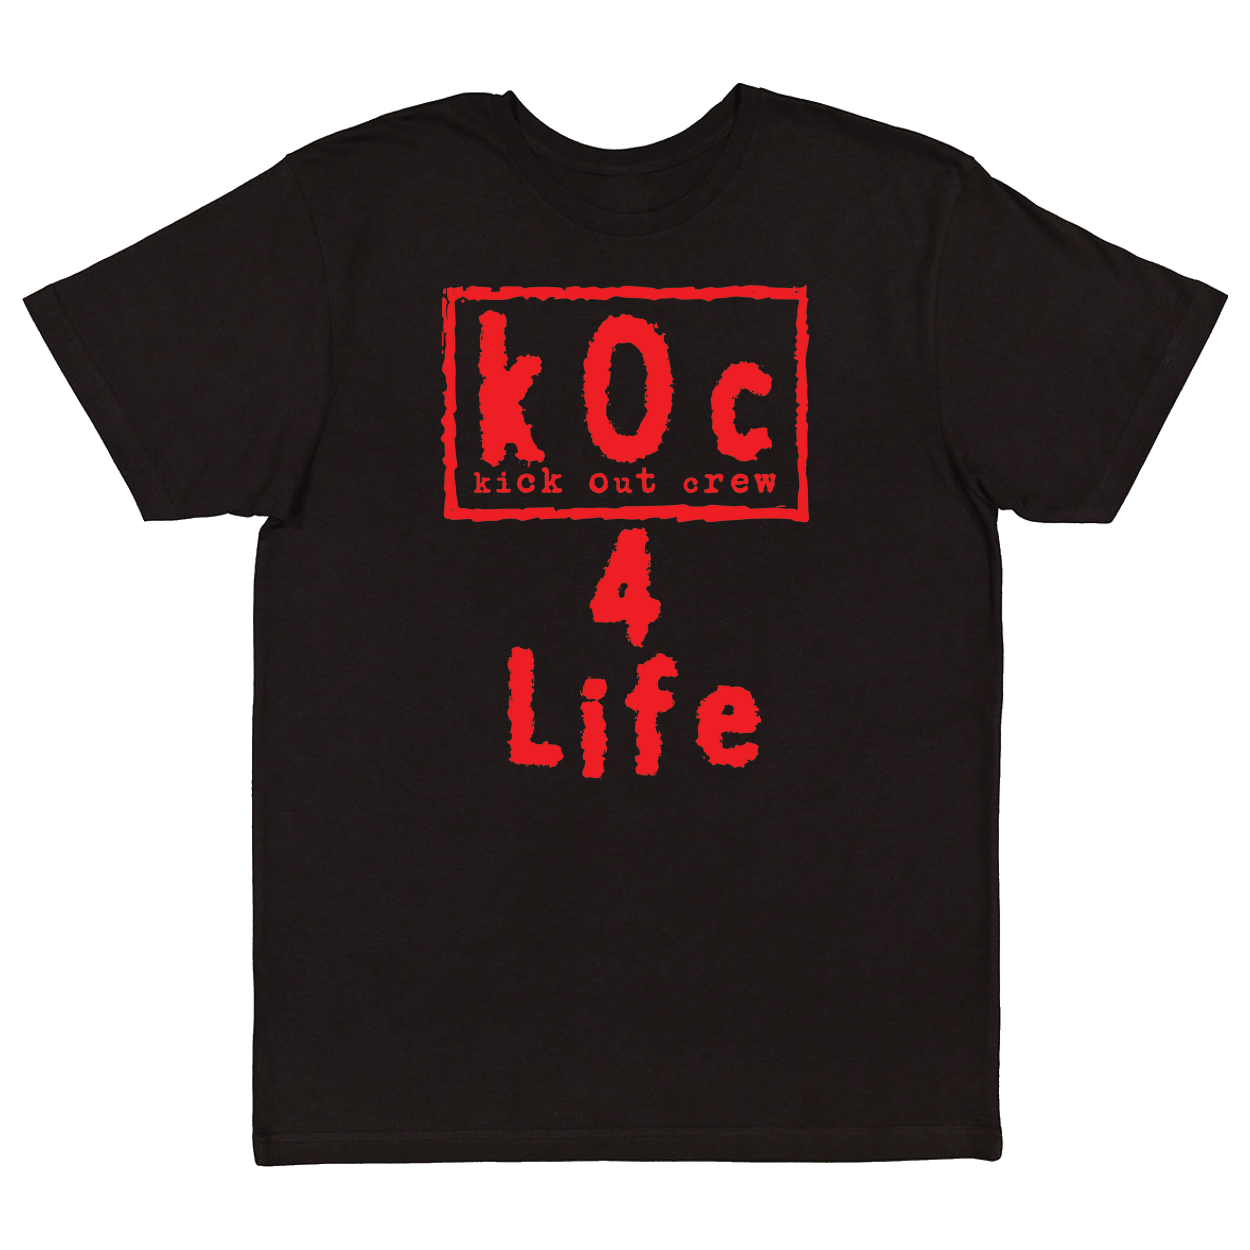 KOC 4 Life (T-Shirt)